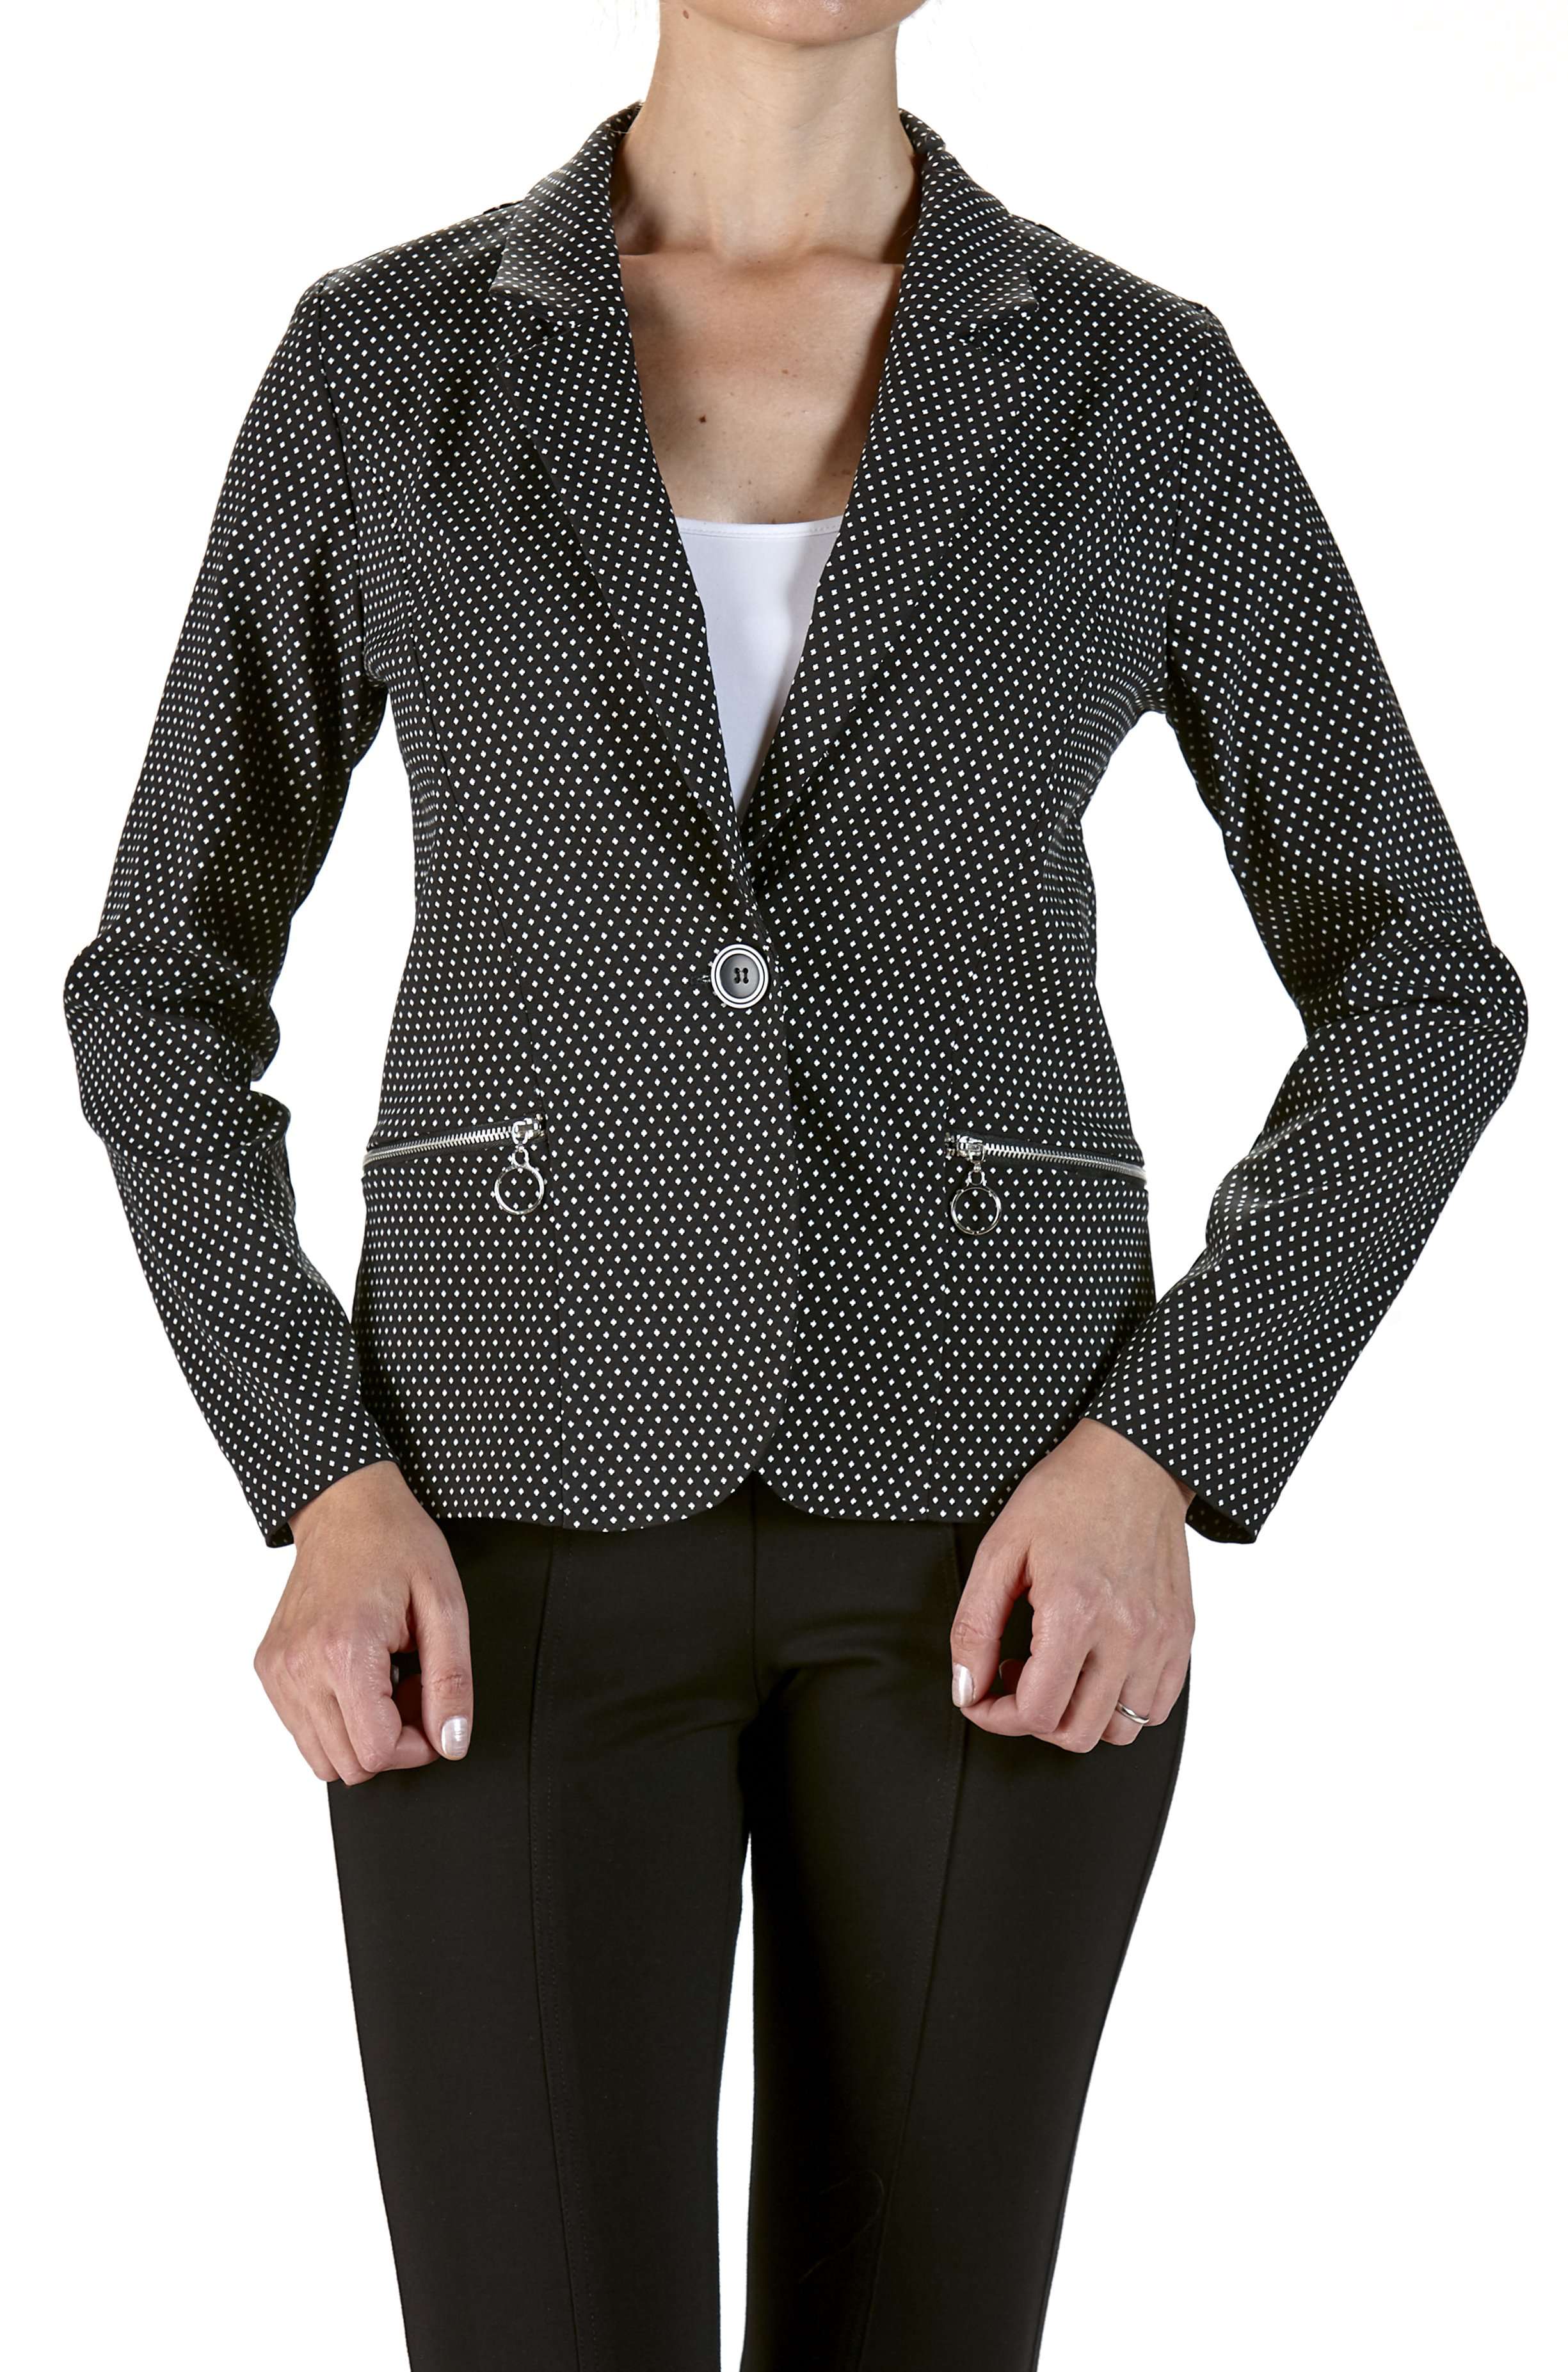 Women's Jacket On Sale 50% Off Black Quality Blazer Made in Canada - Yvonne Marie - Yvonne Marie